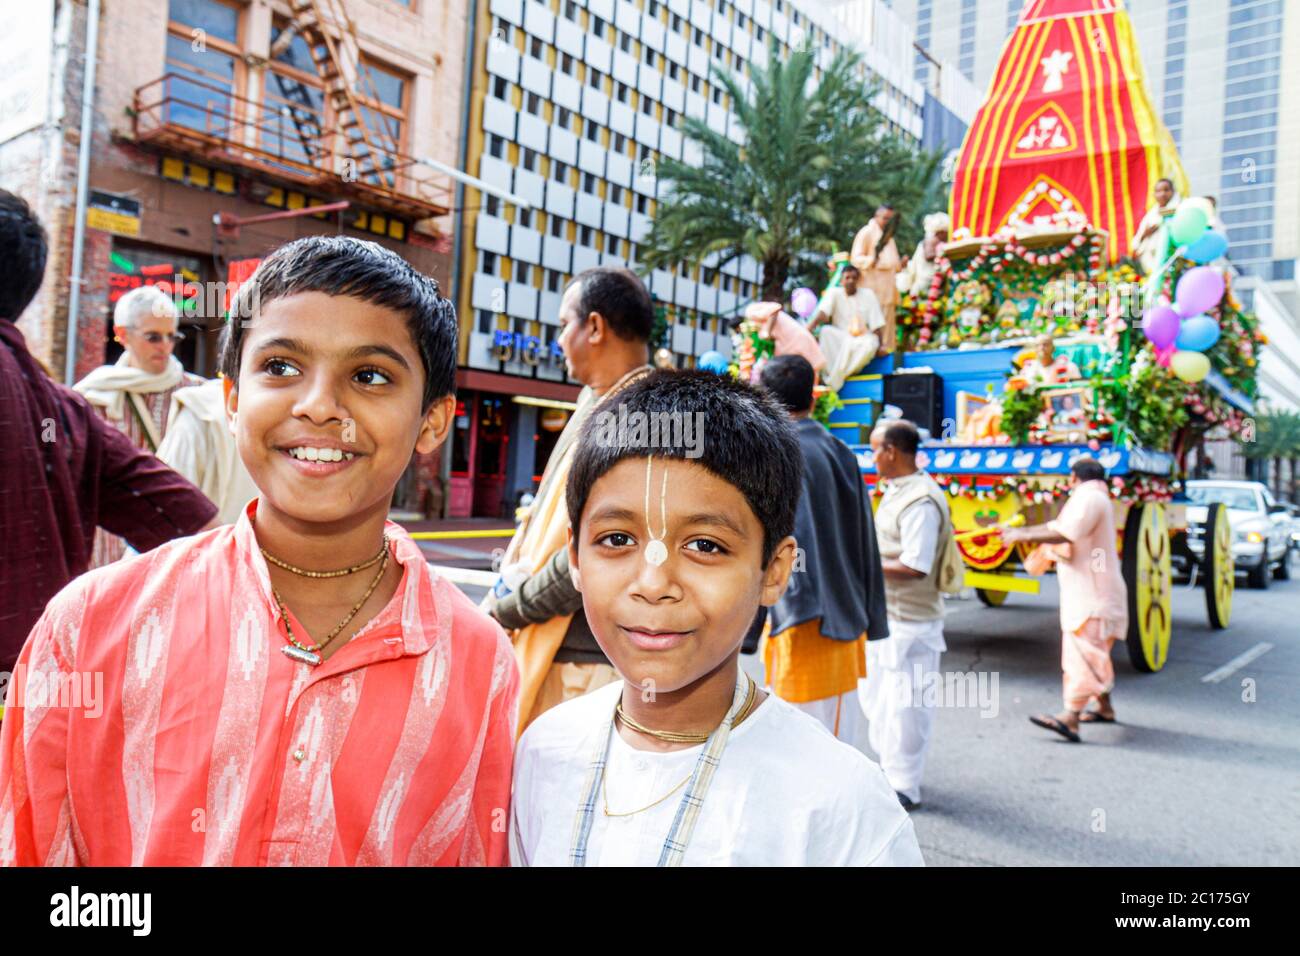 New Orleans Louisiana,downtown,Canal Street,Festival of India,Rath Yatra,Hare Krishna,Eastern religion,festival,parade float,procession,Asian boy boys Stock Photo